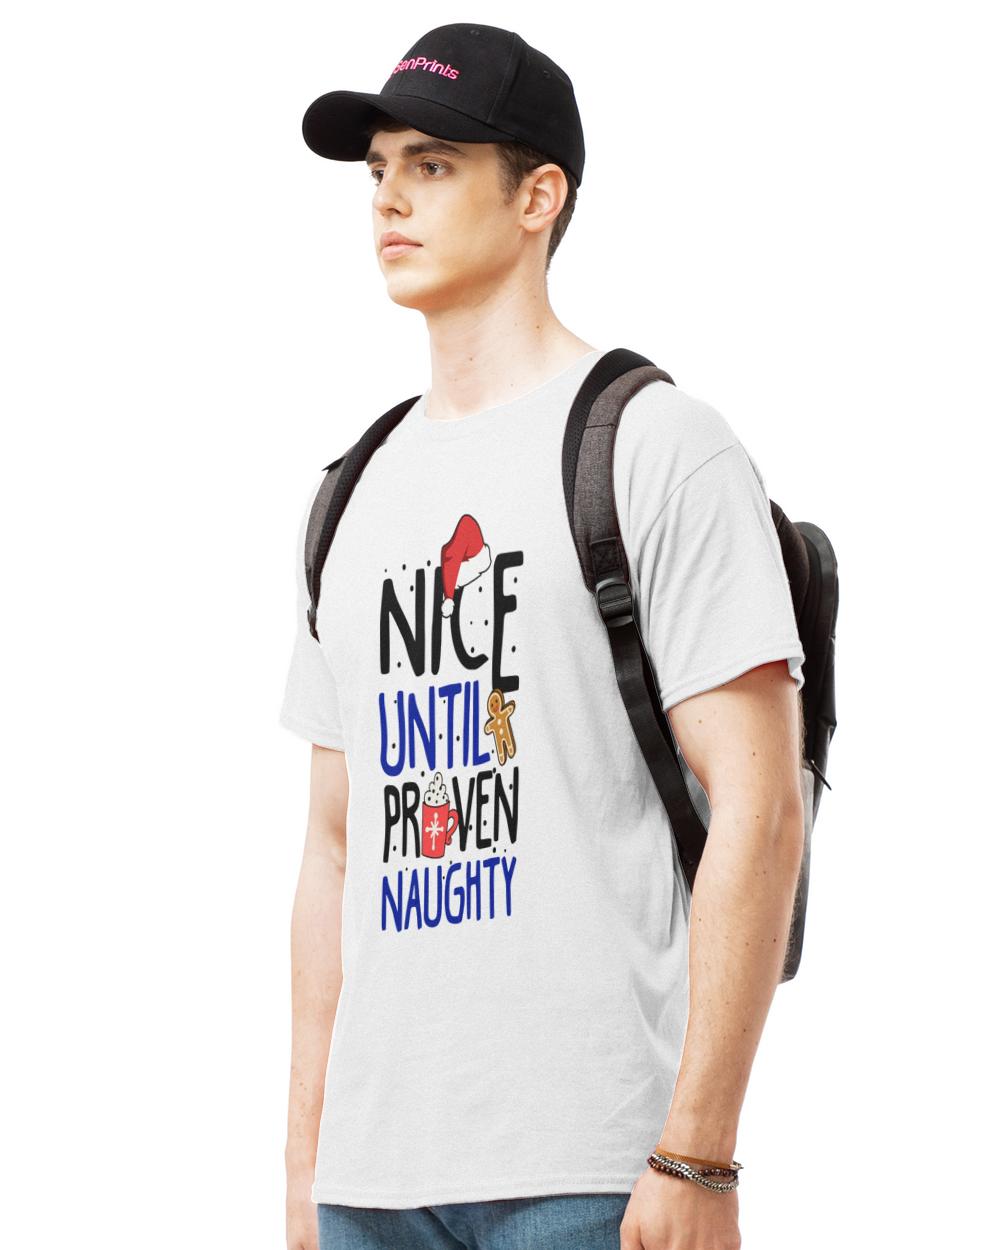 Premium nice until proven naughty funny christmas sweatshirt t-shirt